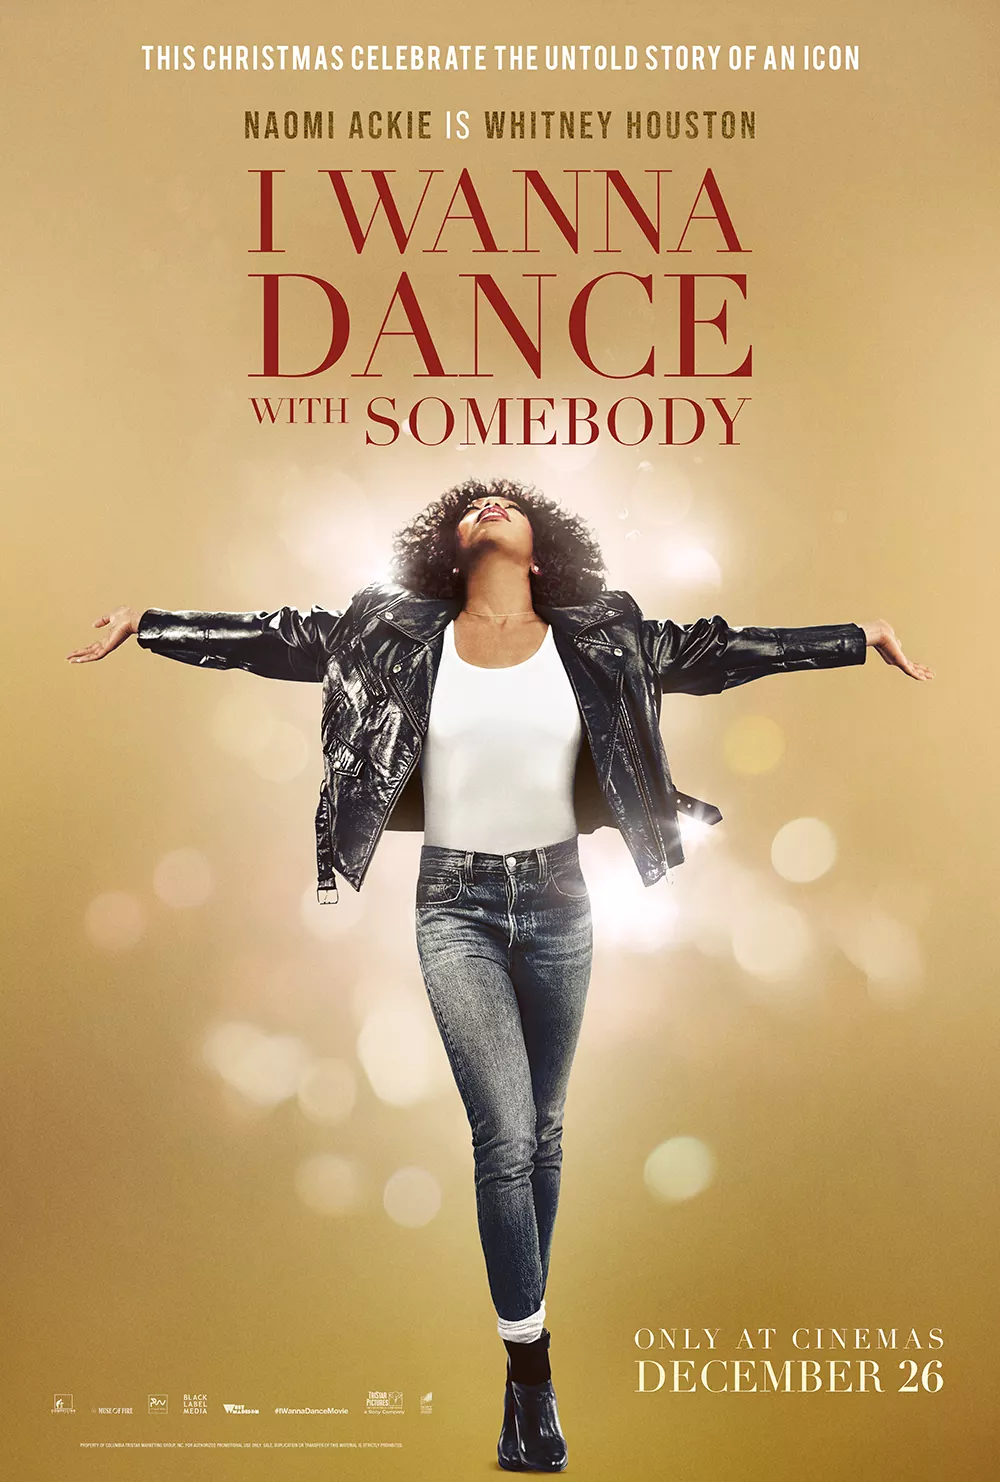 Trailer Από Το "I Wanna Dance With Somebody"